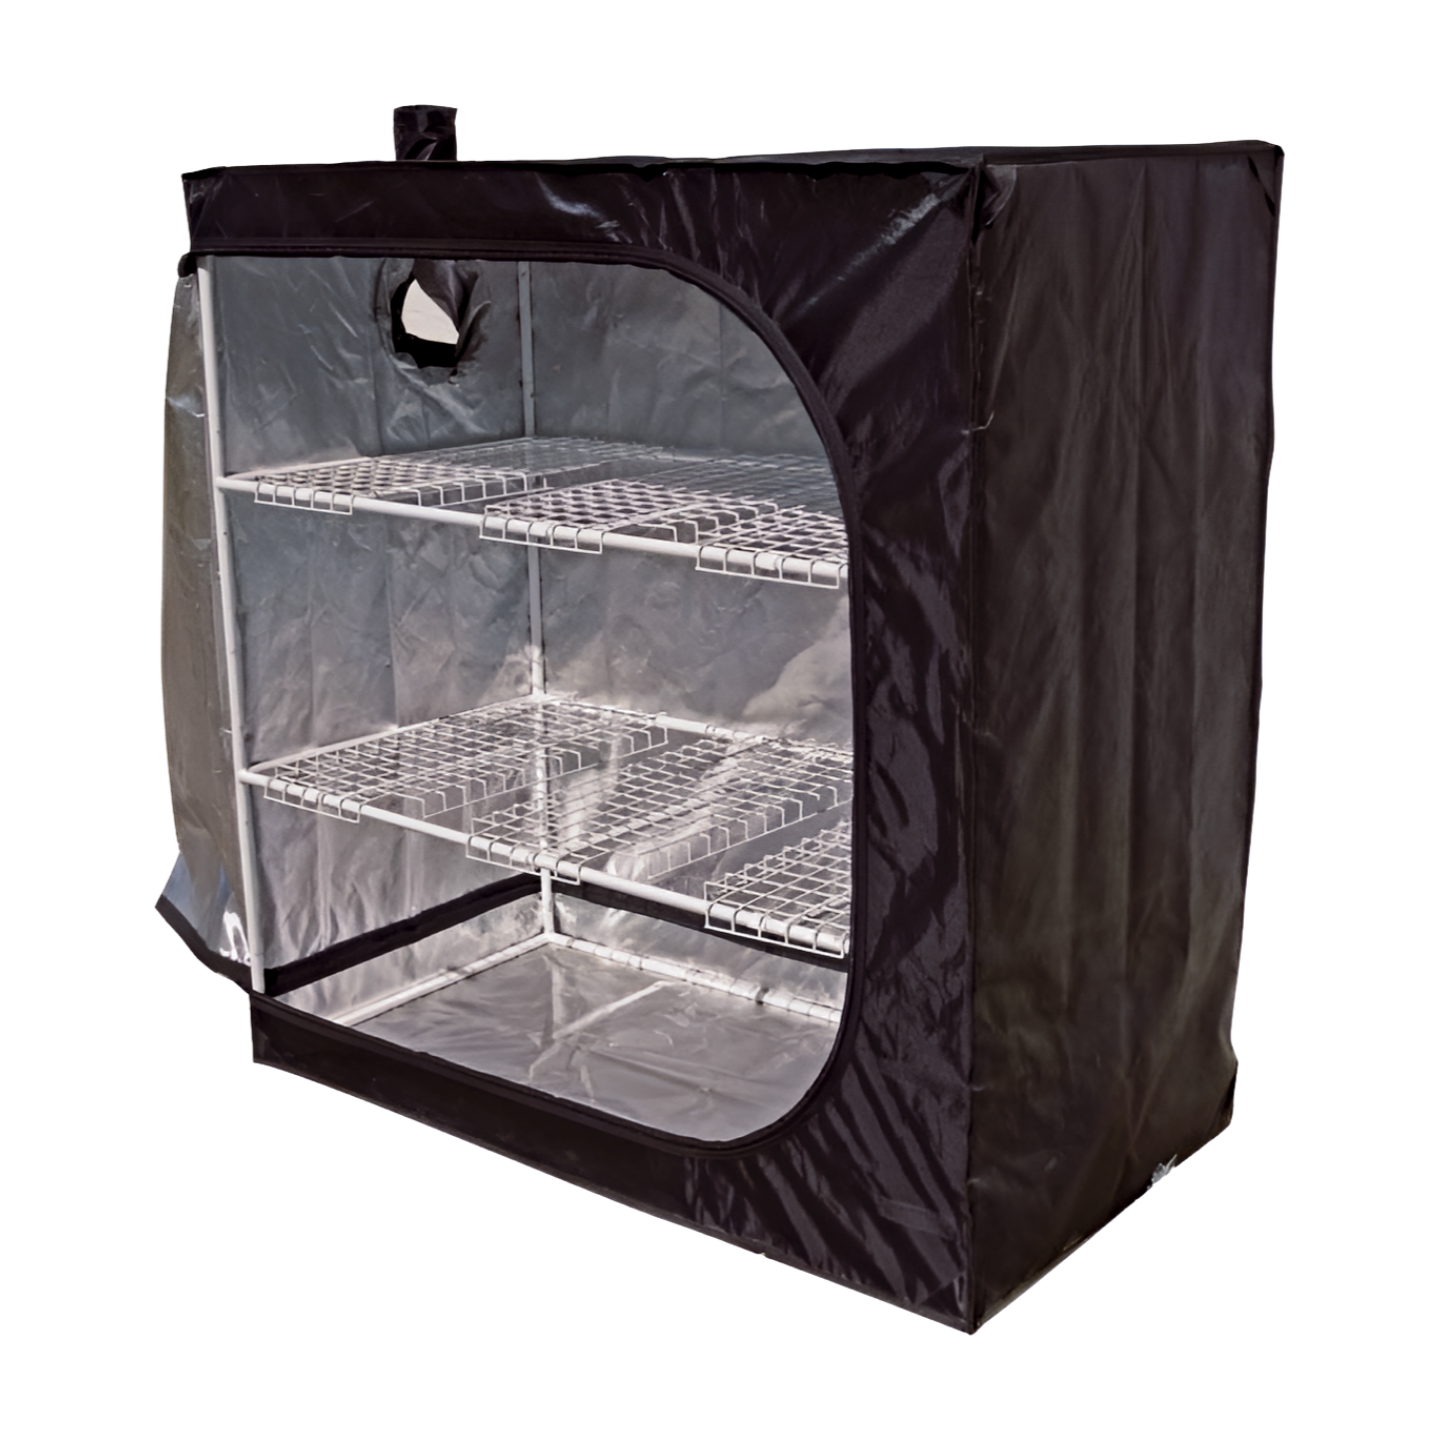 Gorillabox Clonebox Clone Grow Tent 1.2x0.6x1.2